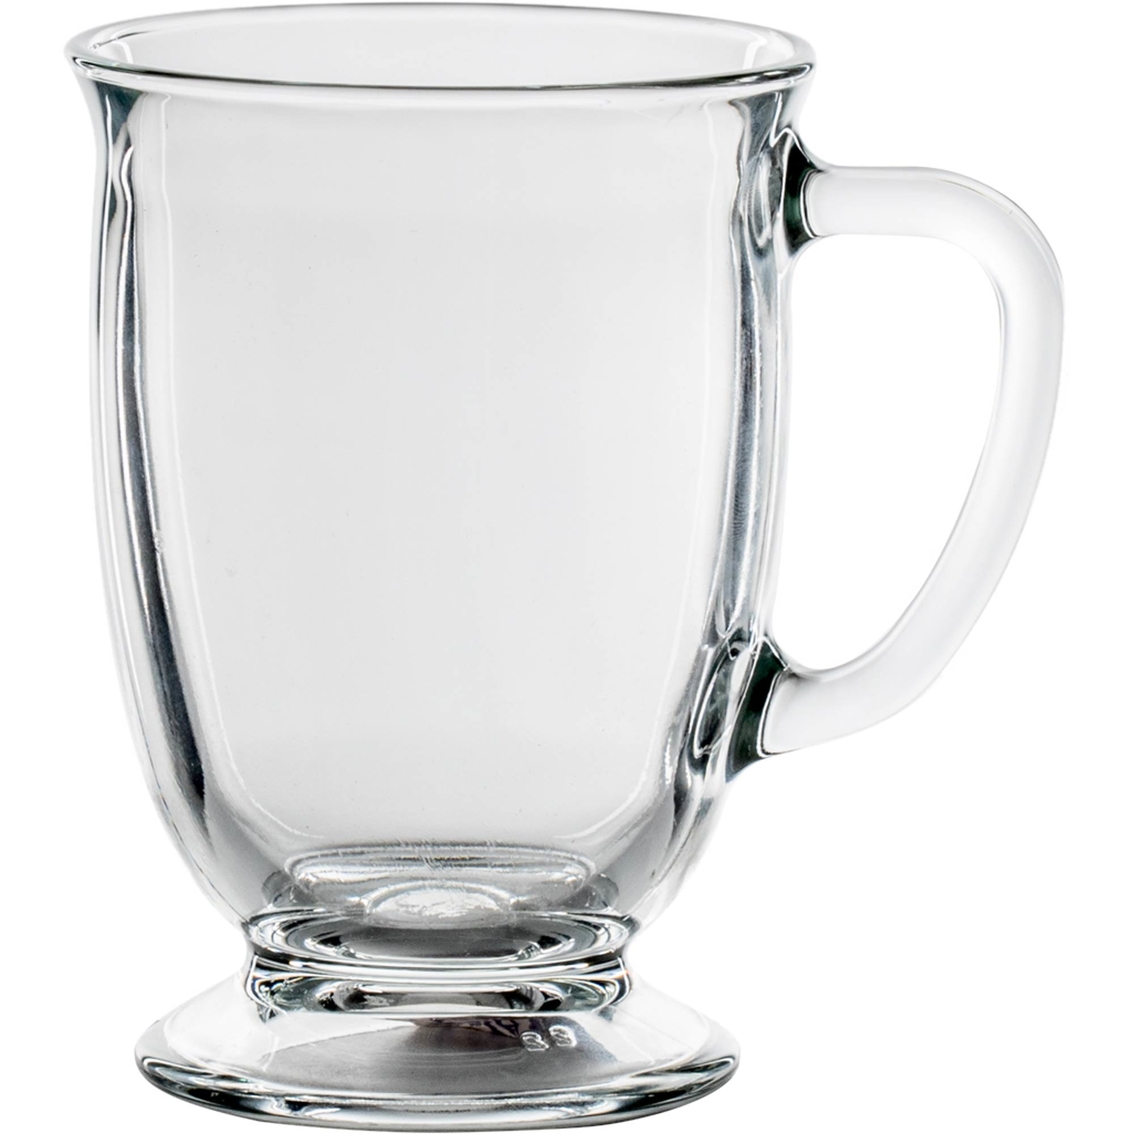 Libbey Glass Kona 16-oz. Mug - Image 2 of 2